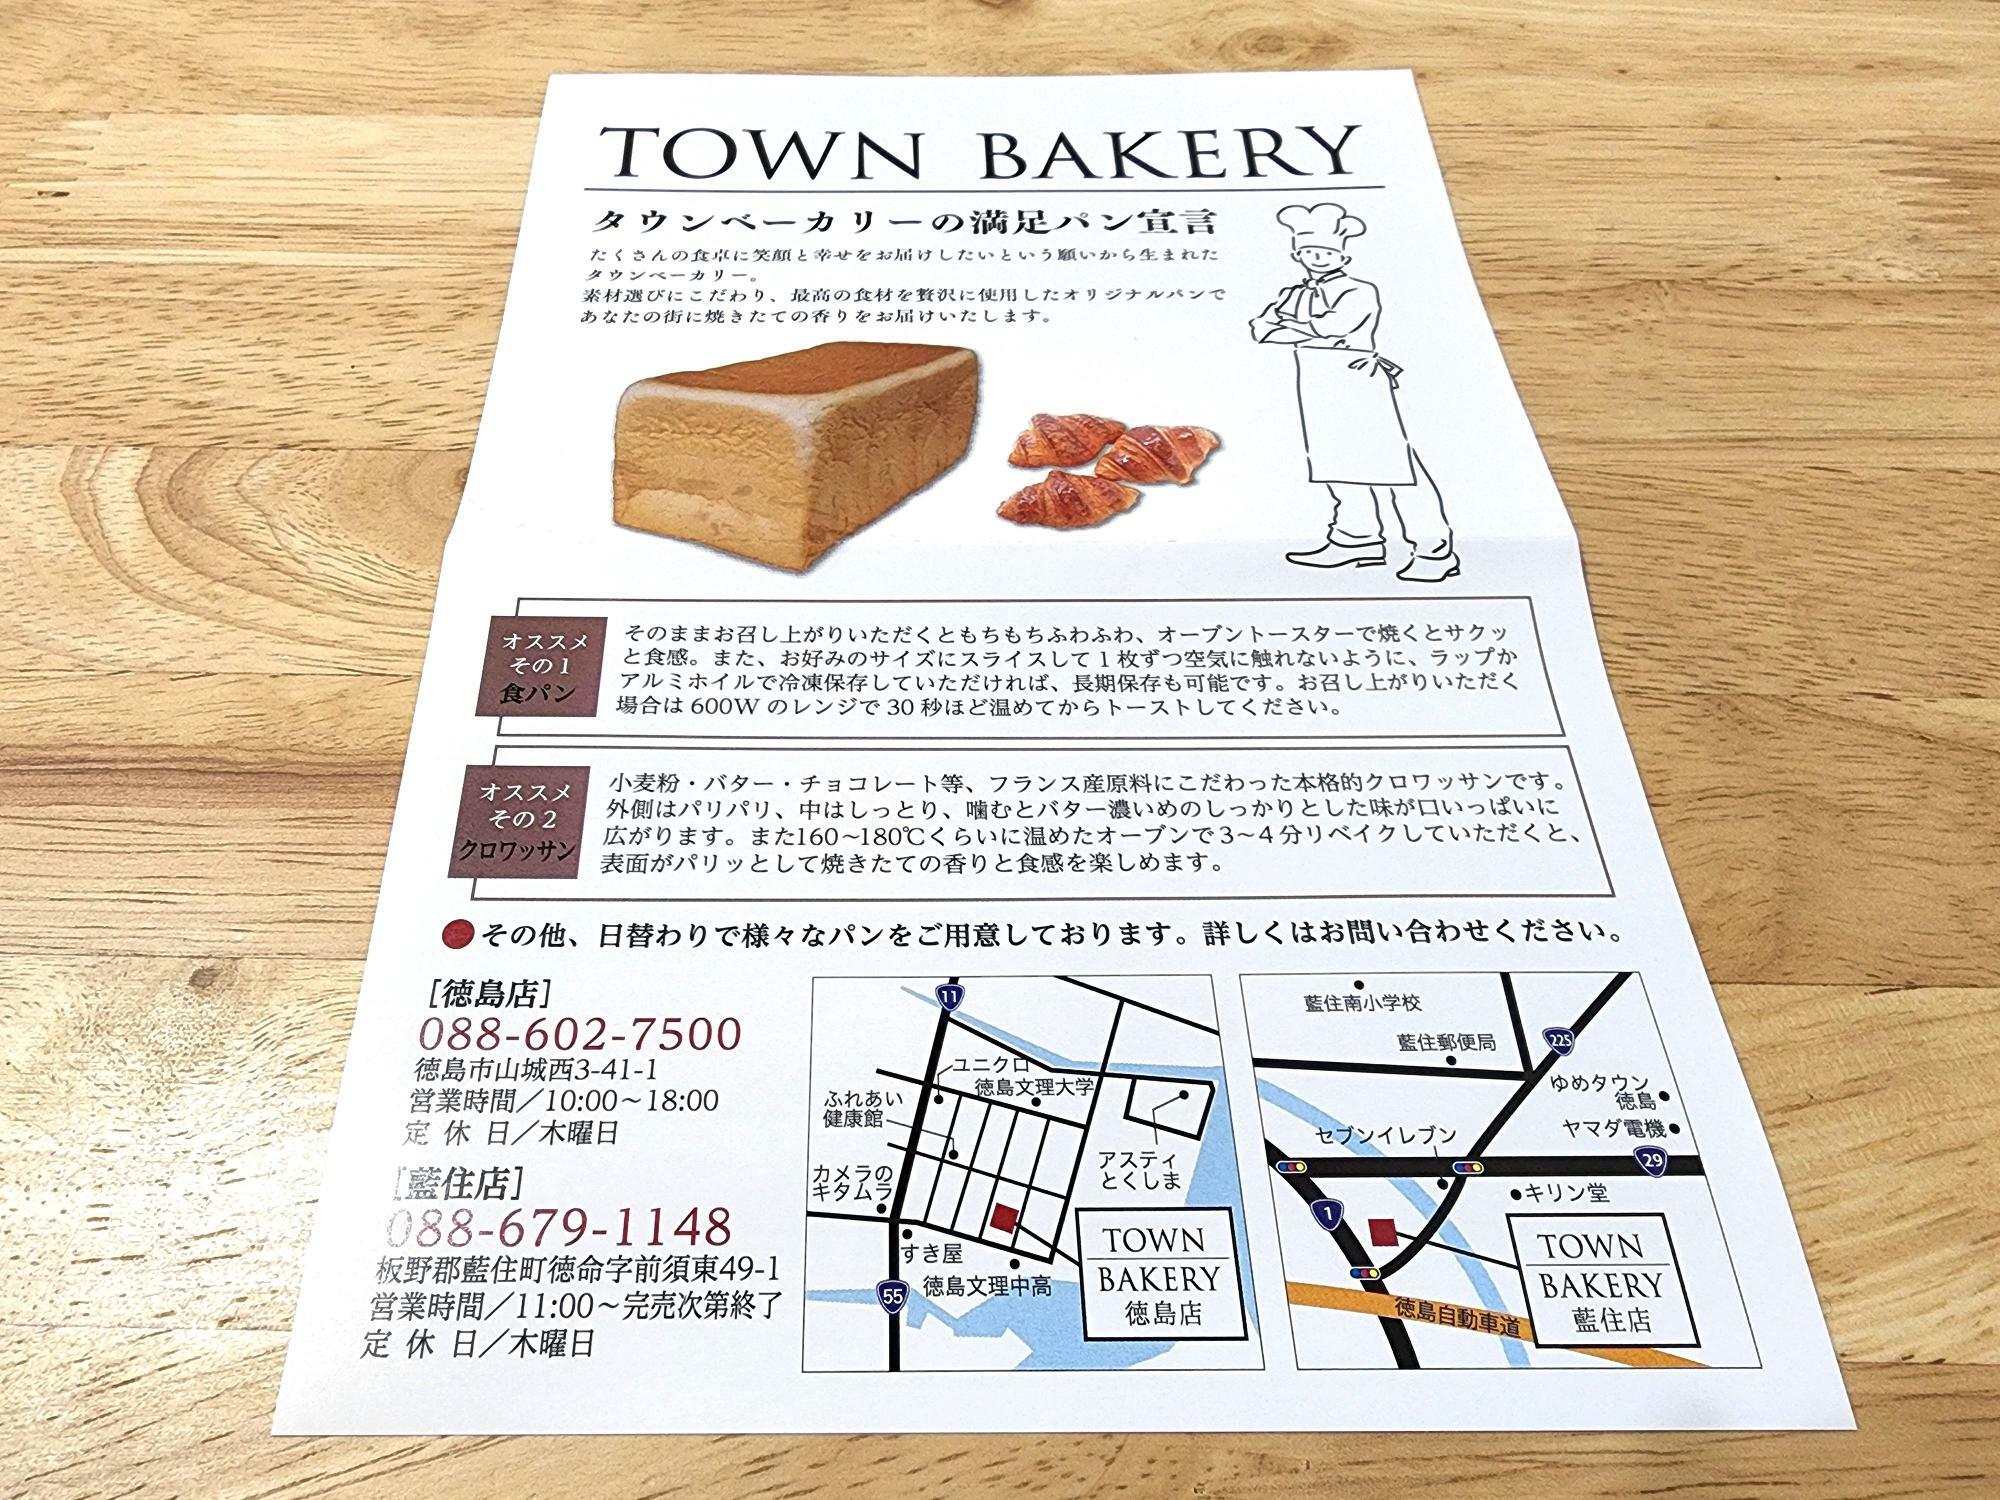 「TOWN BAKERY 徳島店」でもらったチラシ。